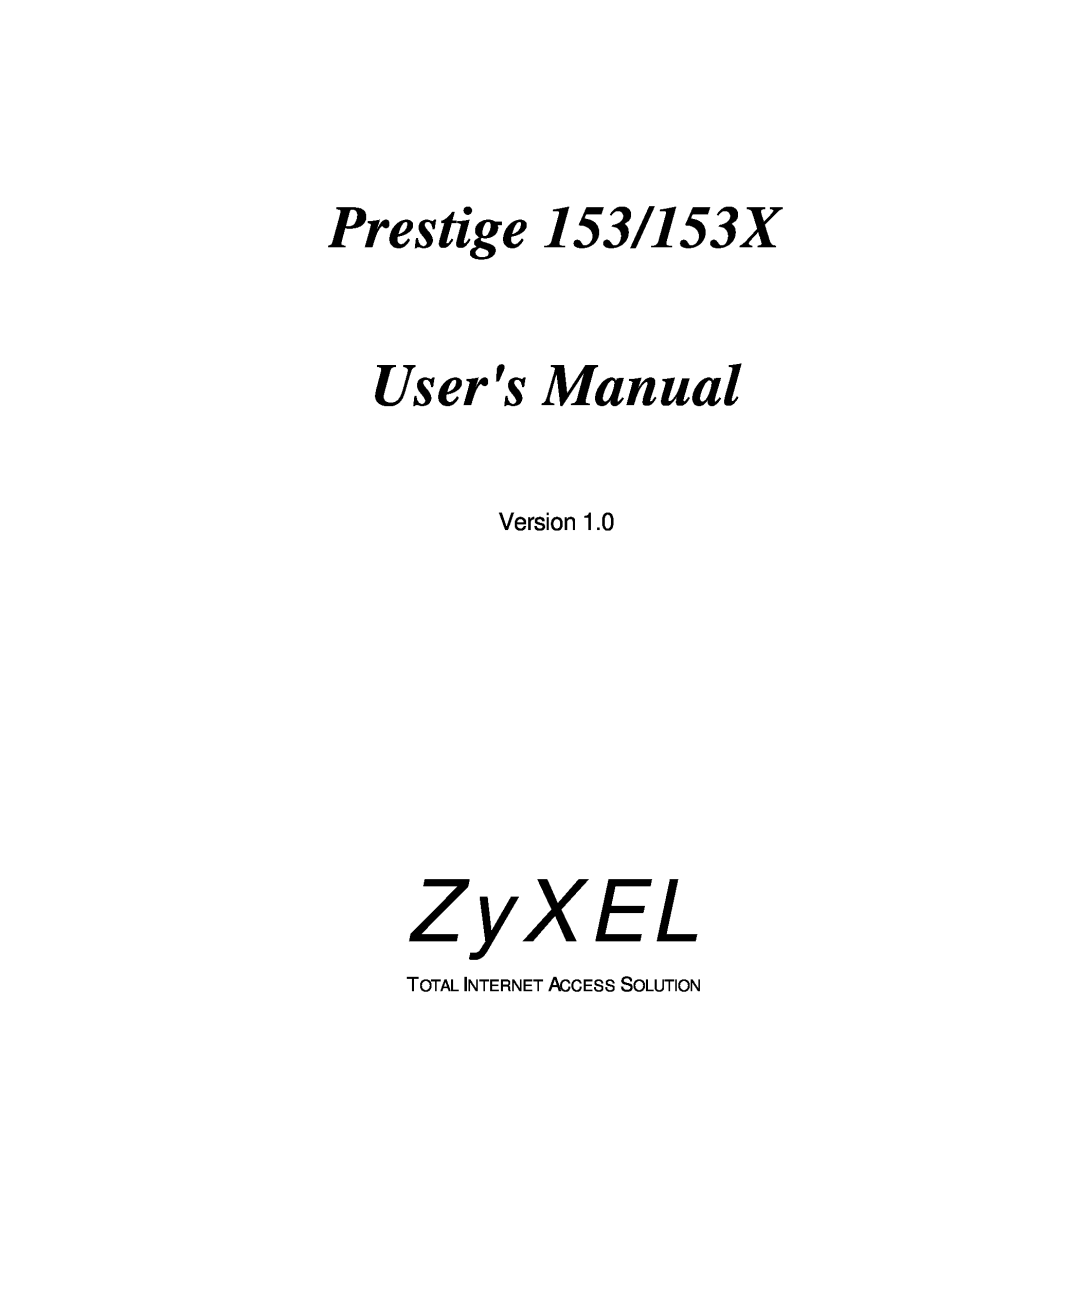 ZyXEL Communications user manual ZyXEL, Prestige 153/153X, Users Manual, Version 